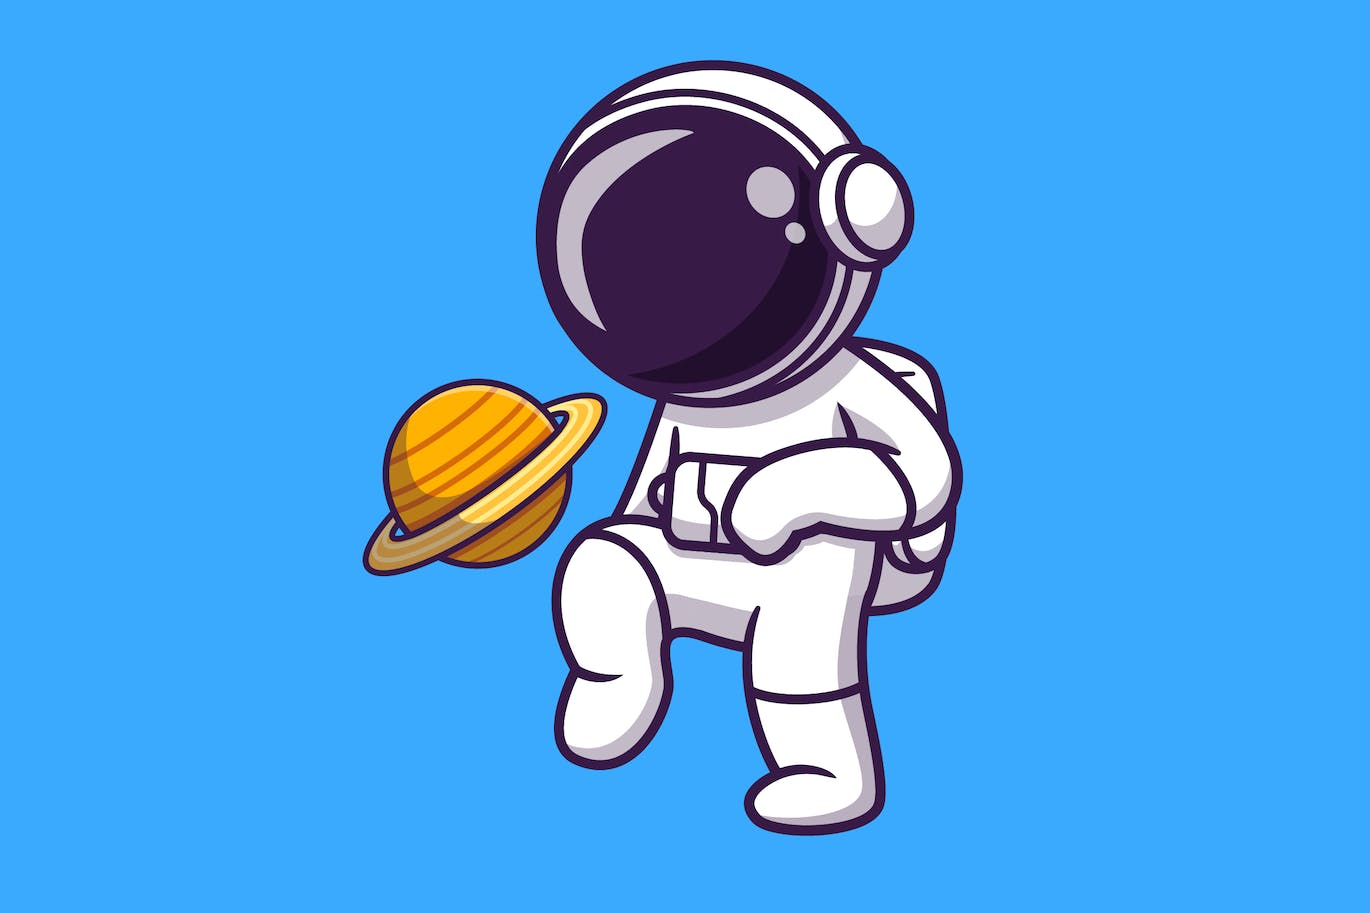 宇航员踢足球矢量卡通插画 Cute Astronaut Playing Soccer Planet Cartoon-1